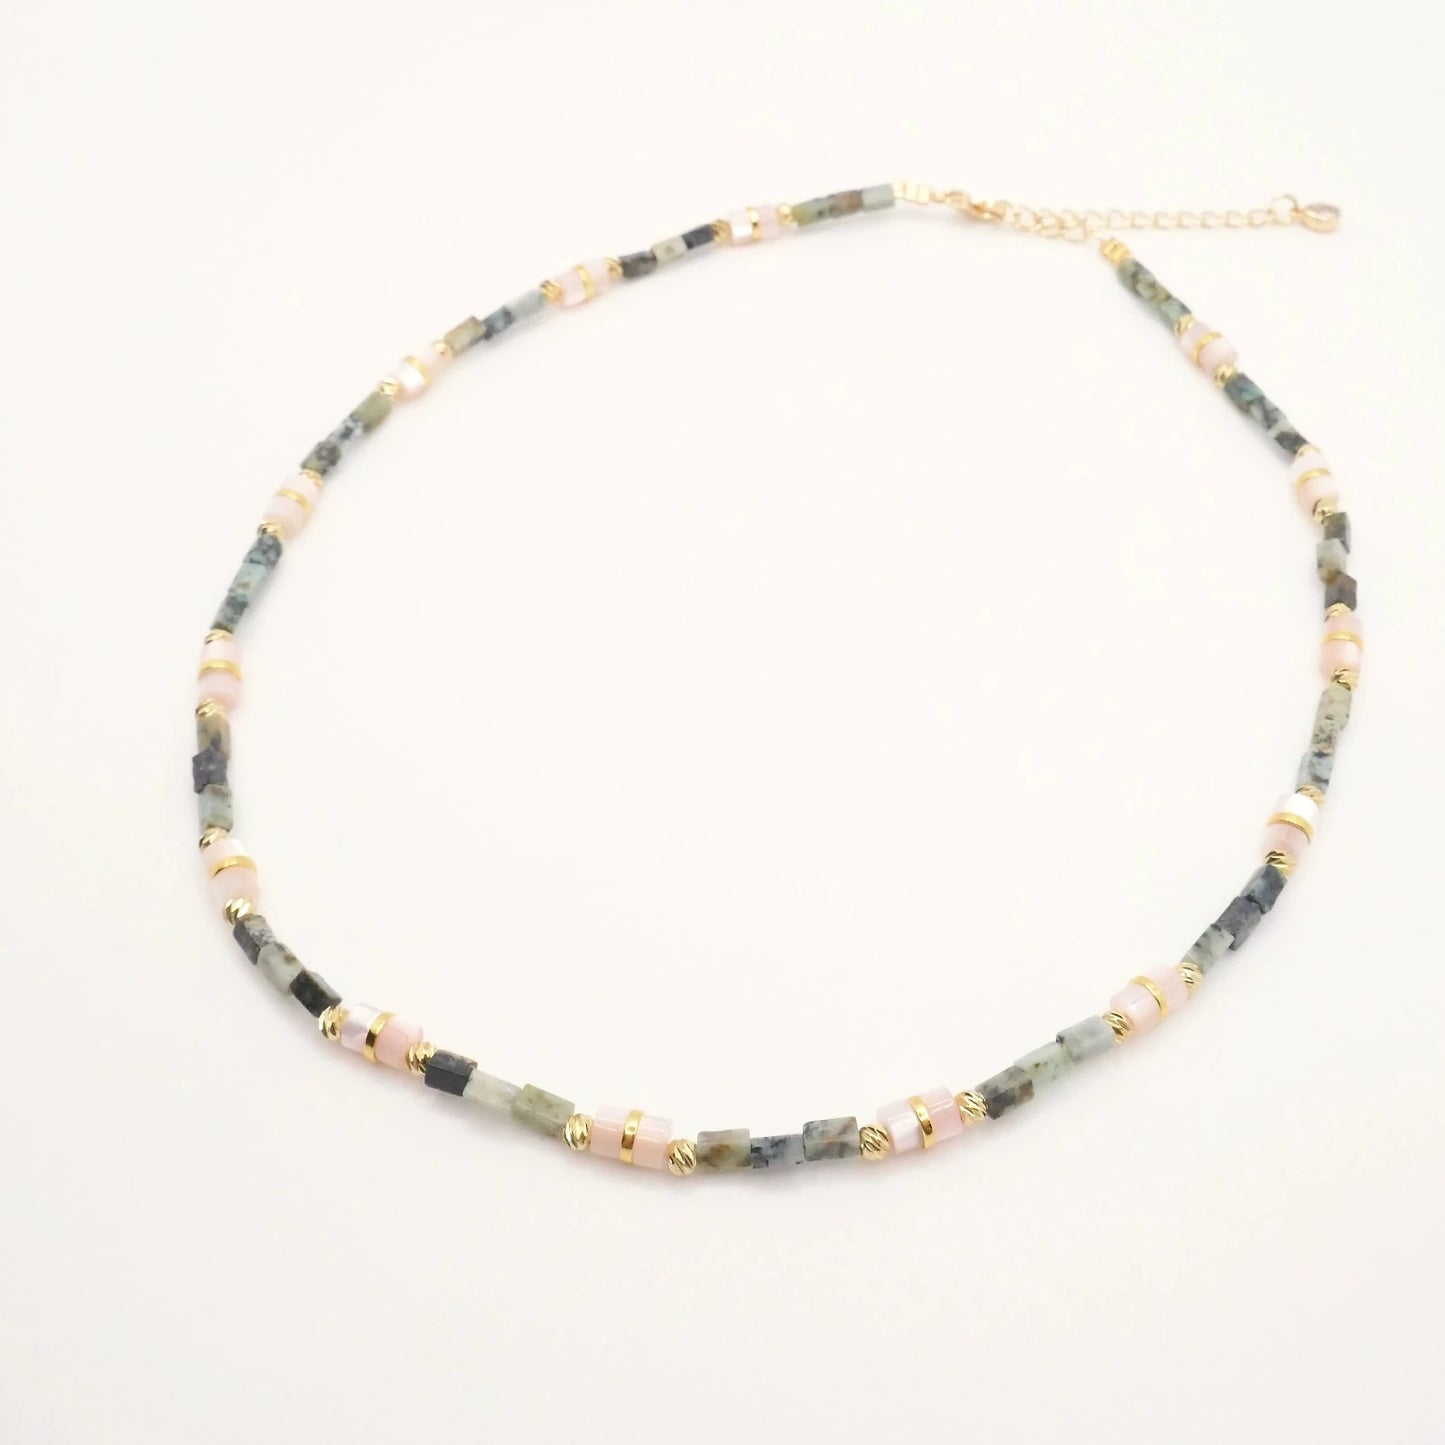 Bijou fabrication artisanale en perles et pierres semi-précieuses